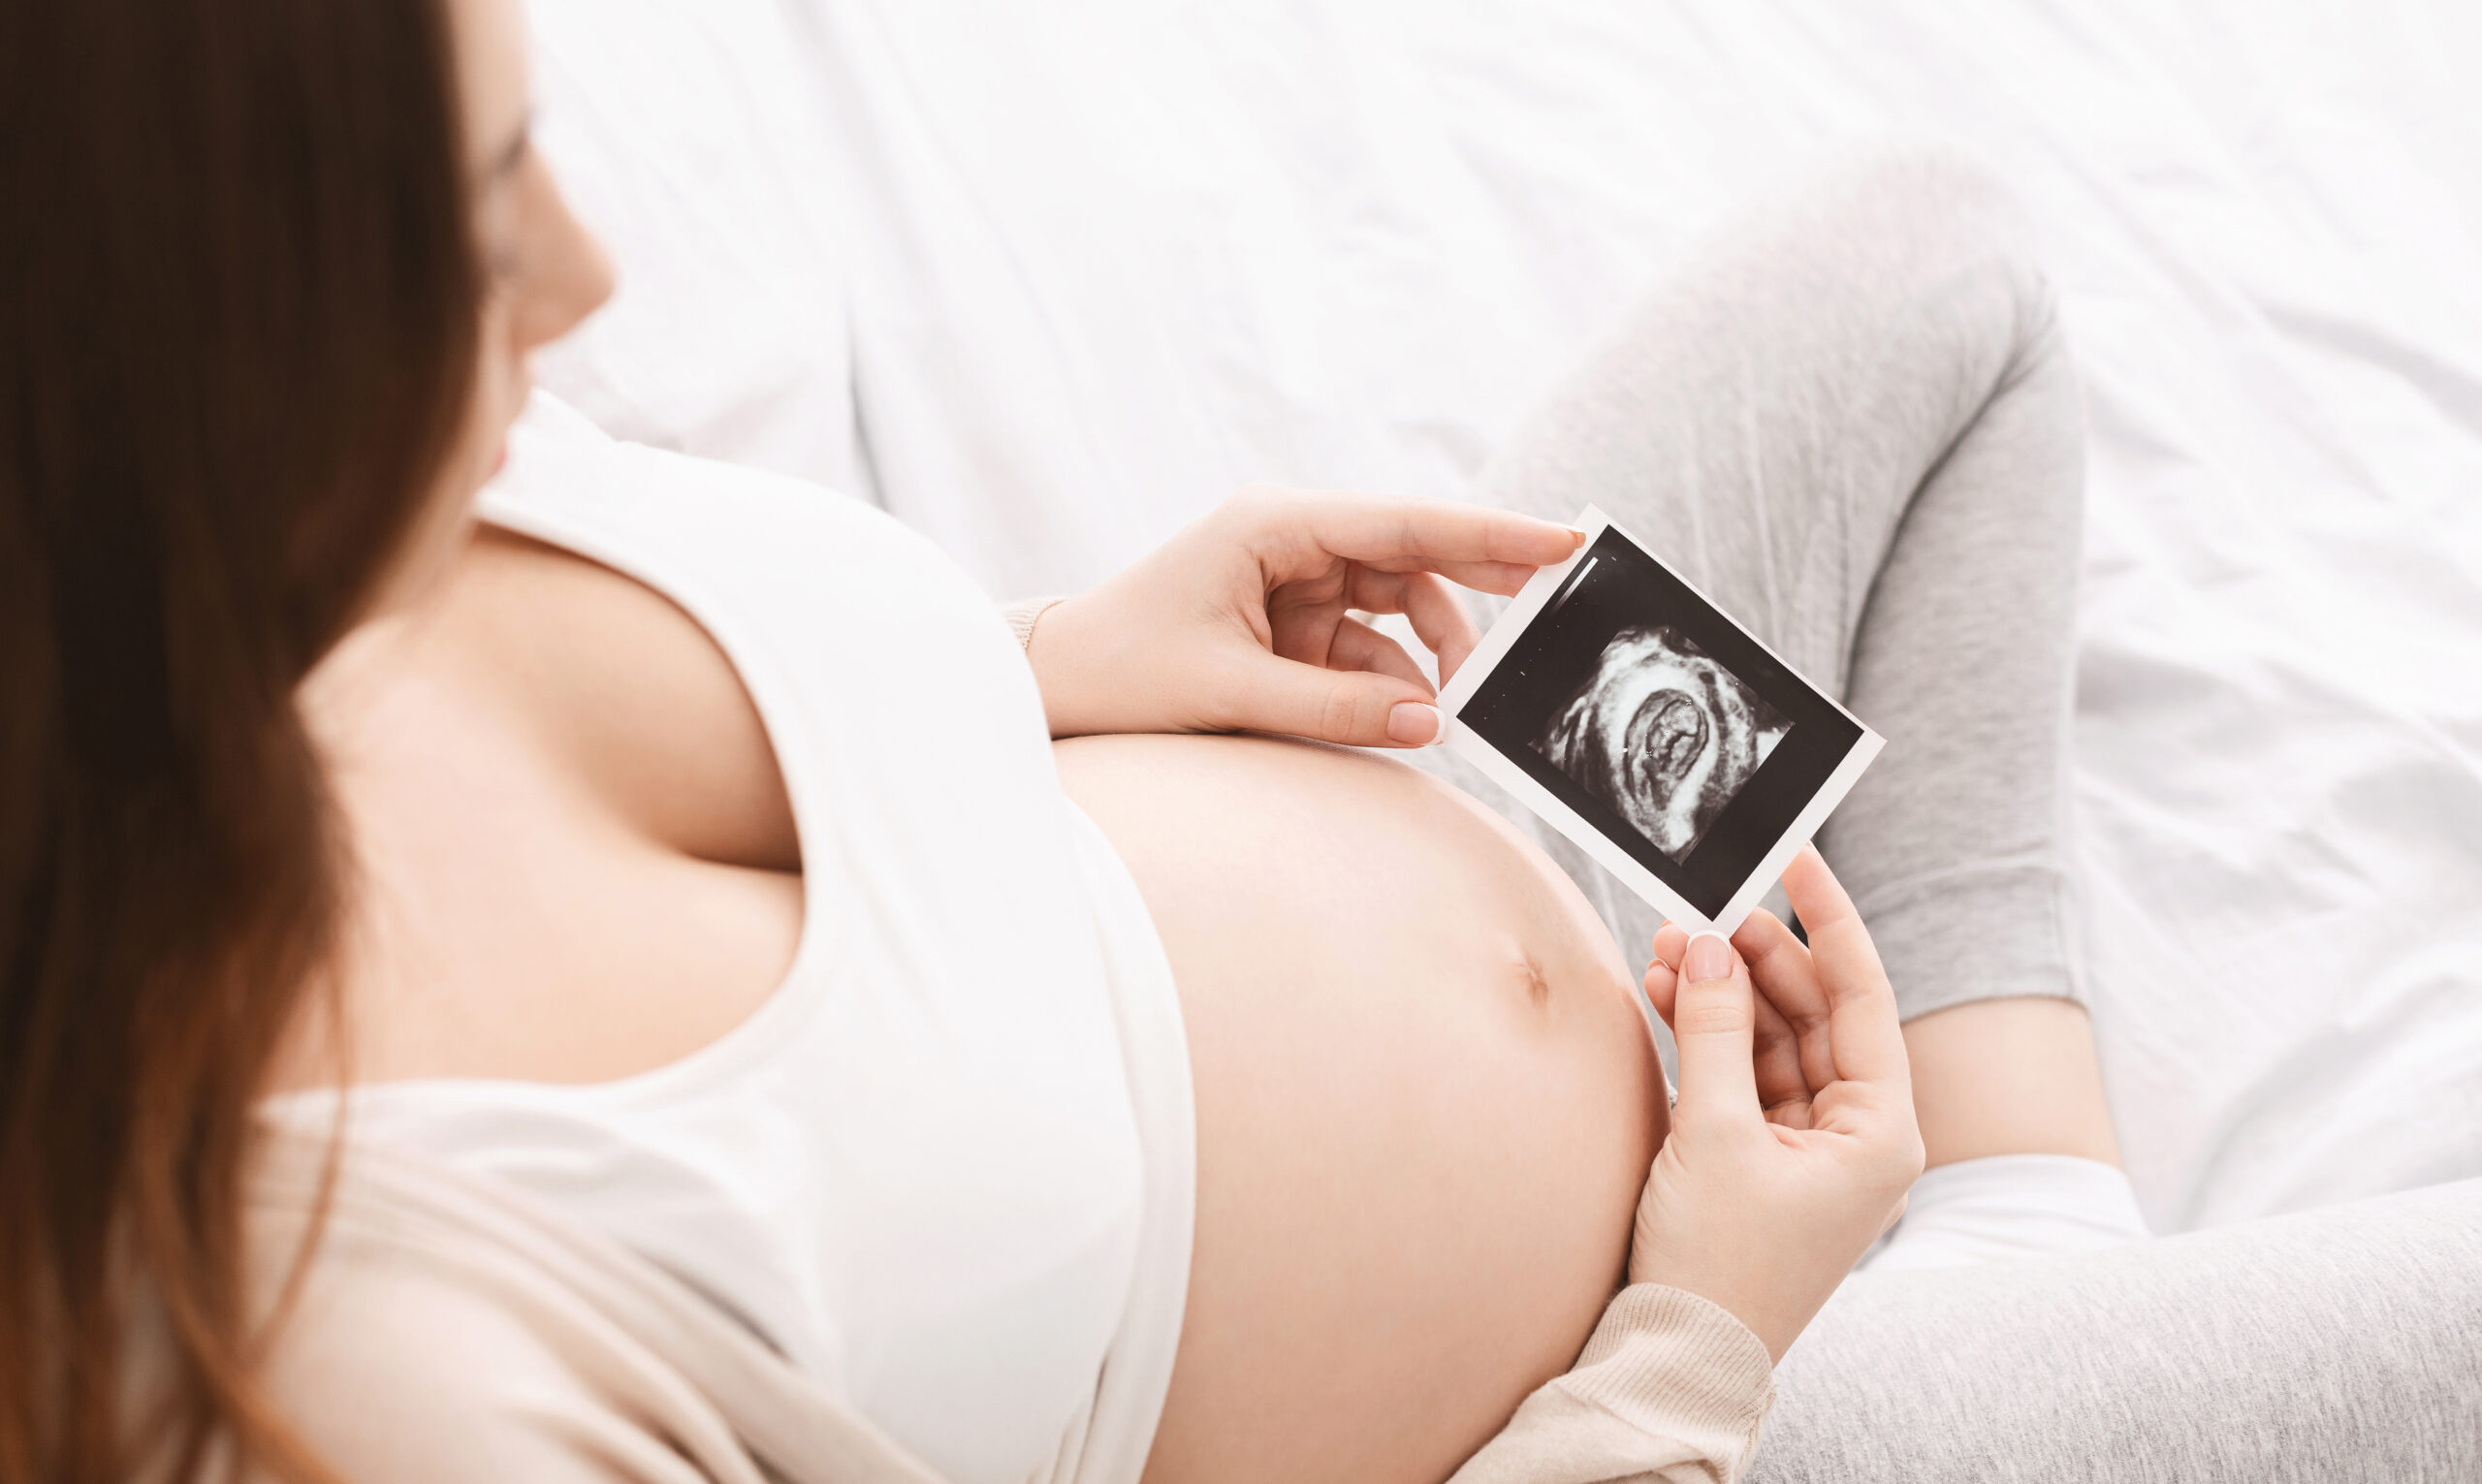 pregnant woman enjoying her baby ultrasound image 2022 12 16 07 33 40 utc scaled